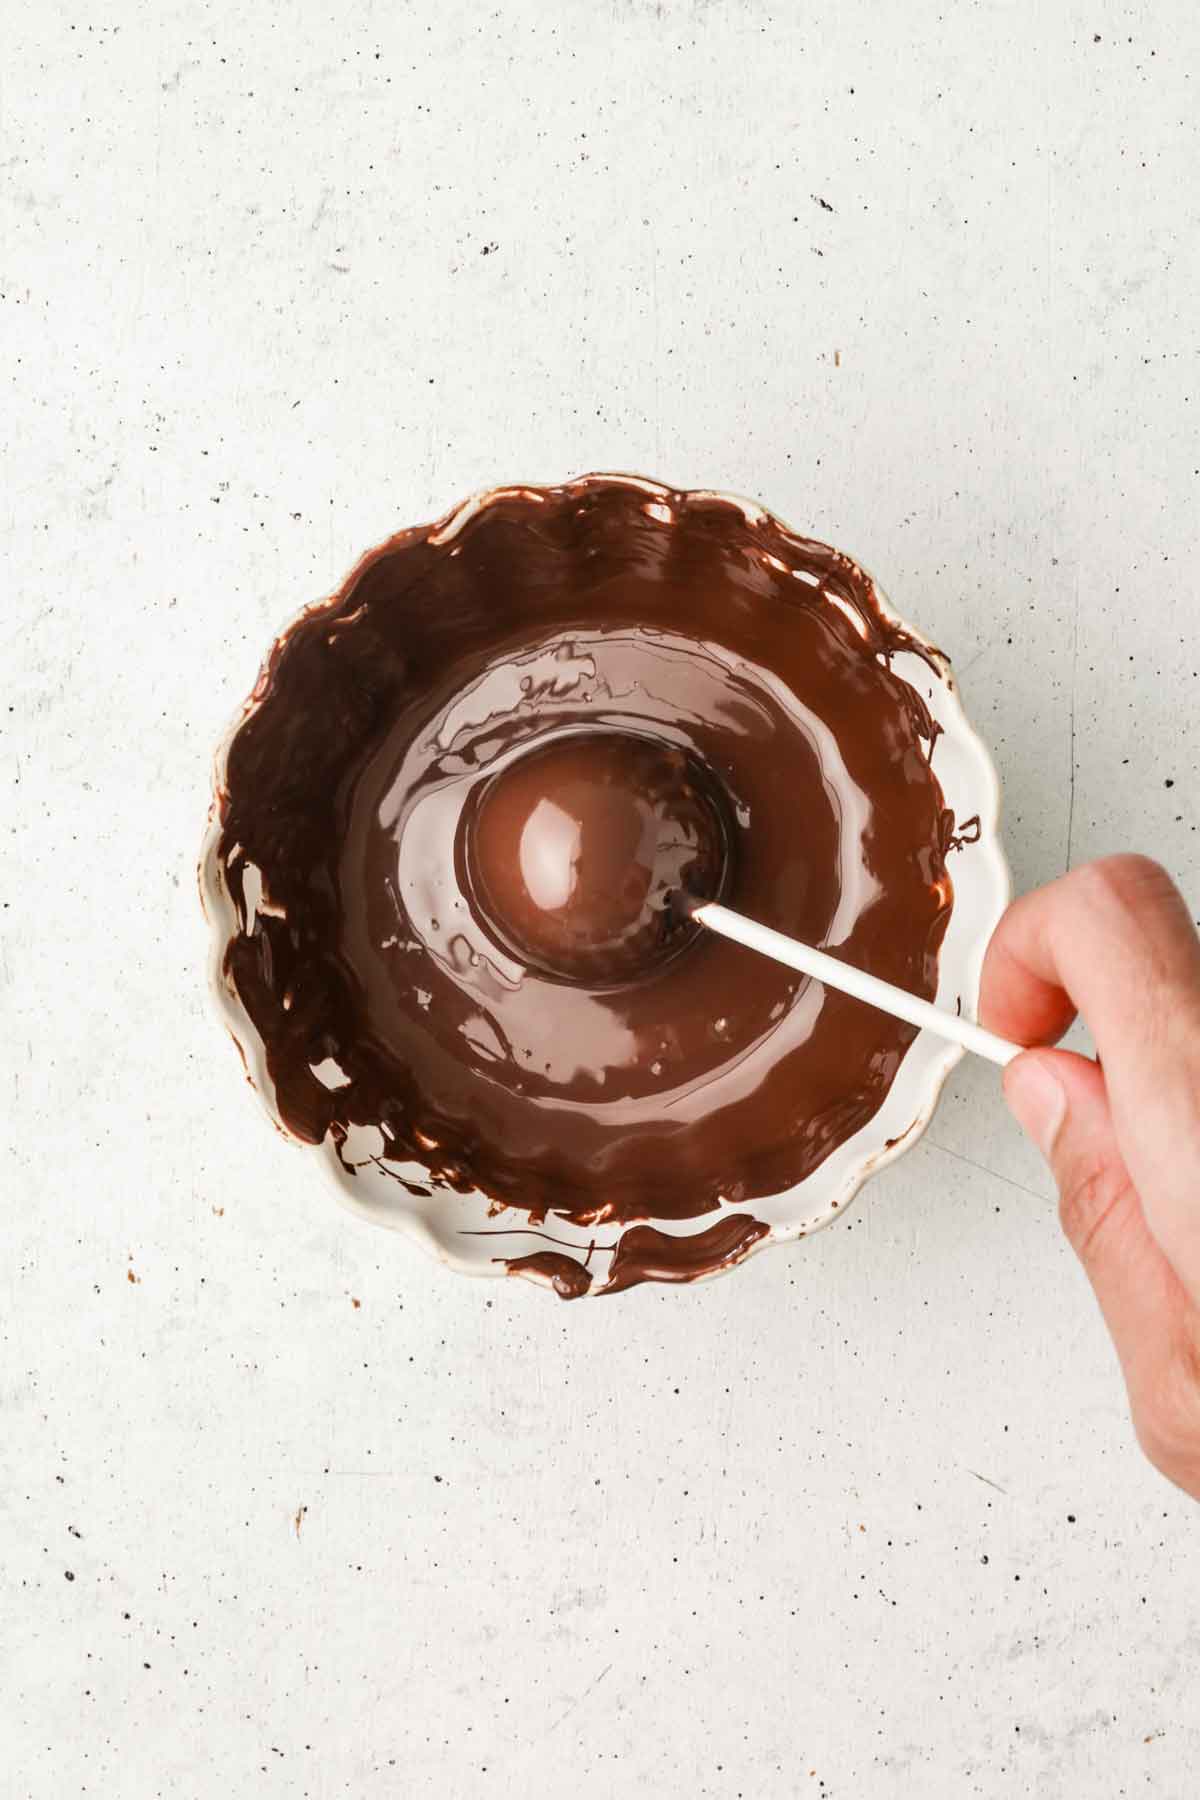 bol avec du chocolat fondu et un cake pop au chocolat dedans